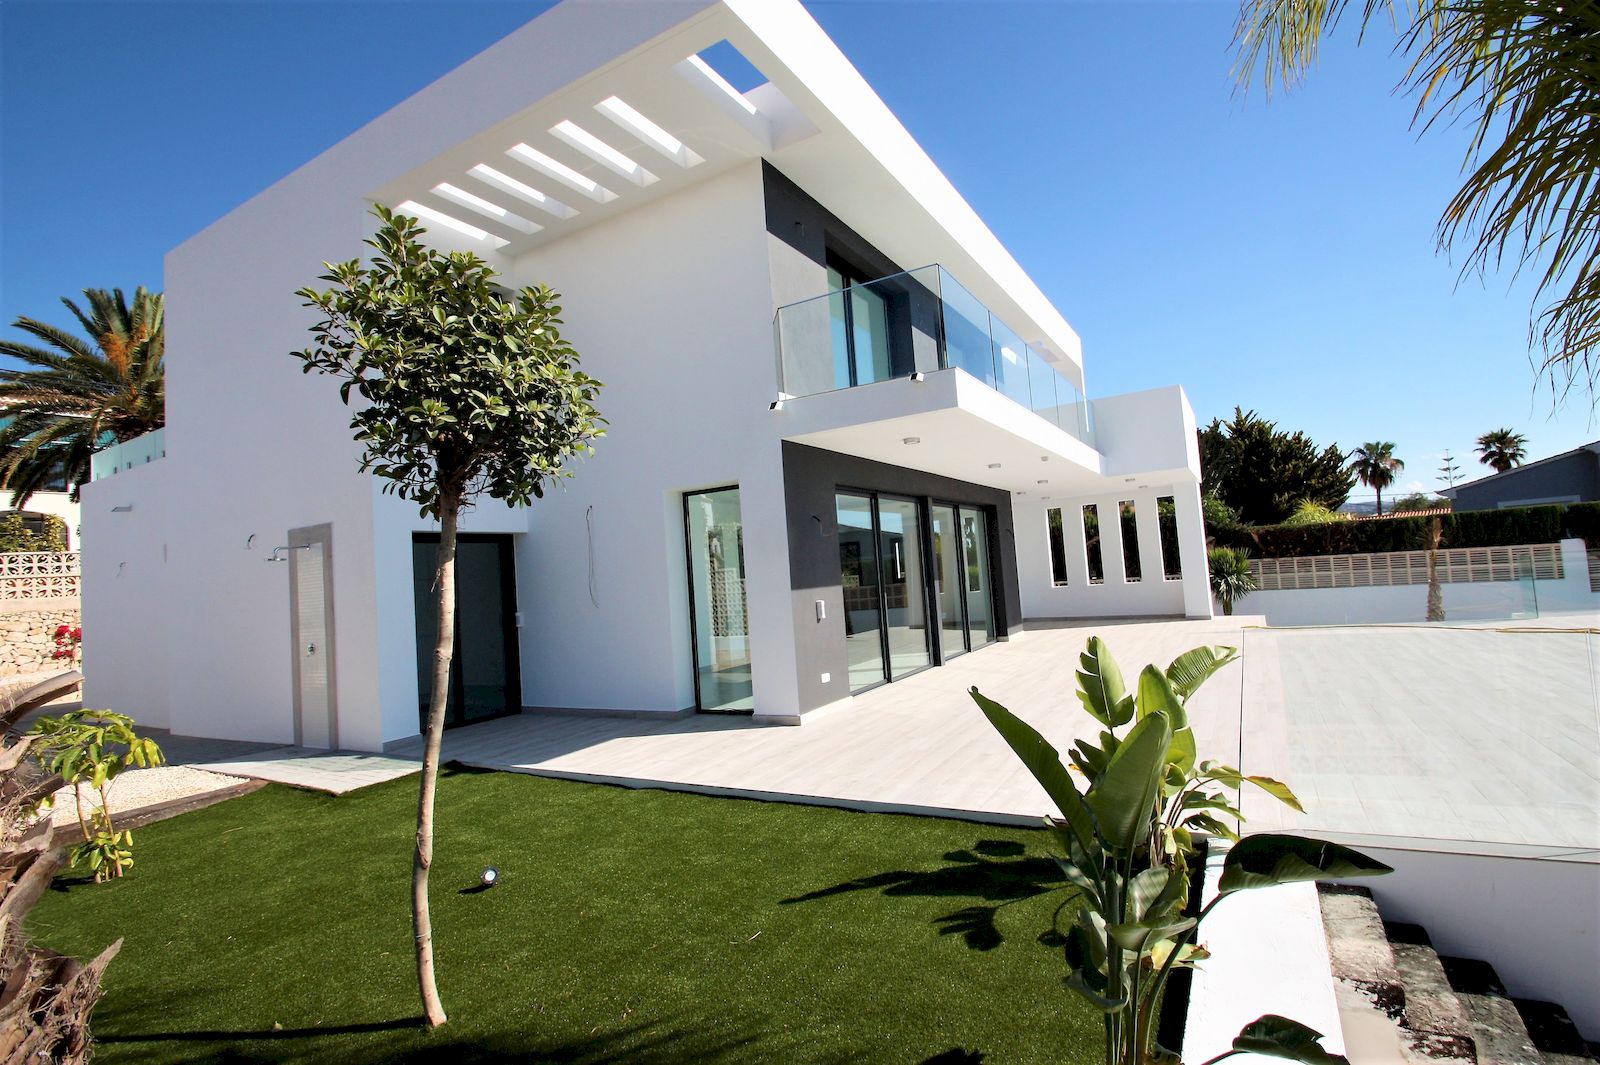 Villa built by GH Costa Blanca - Calpe